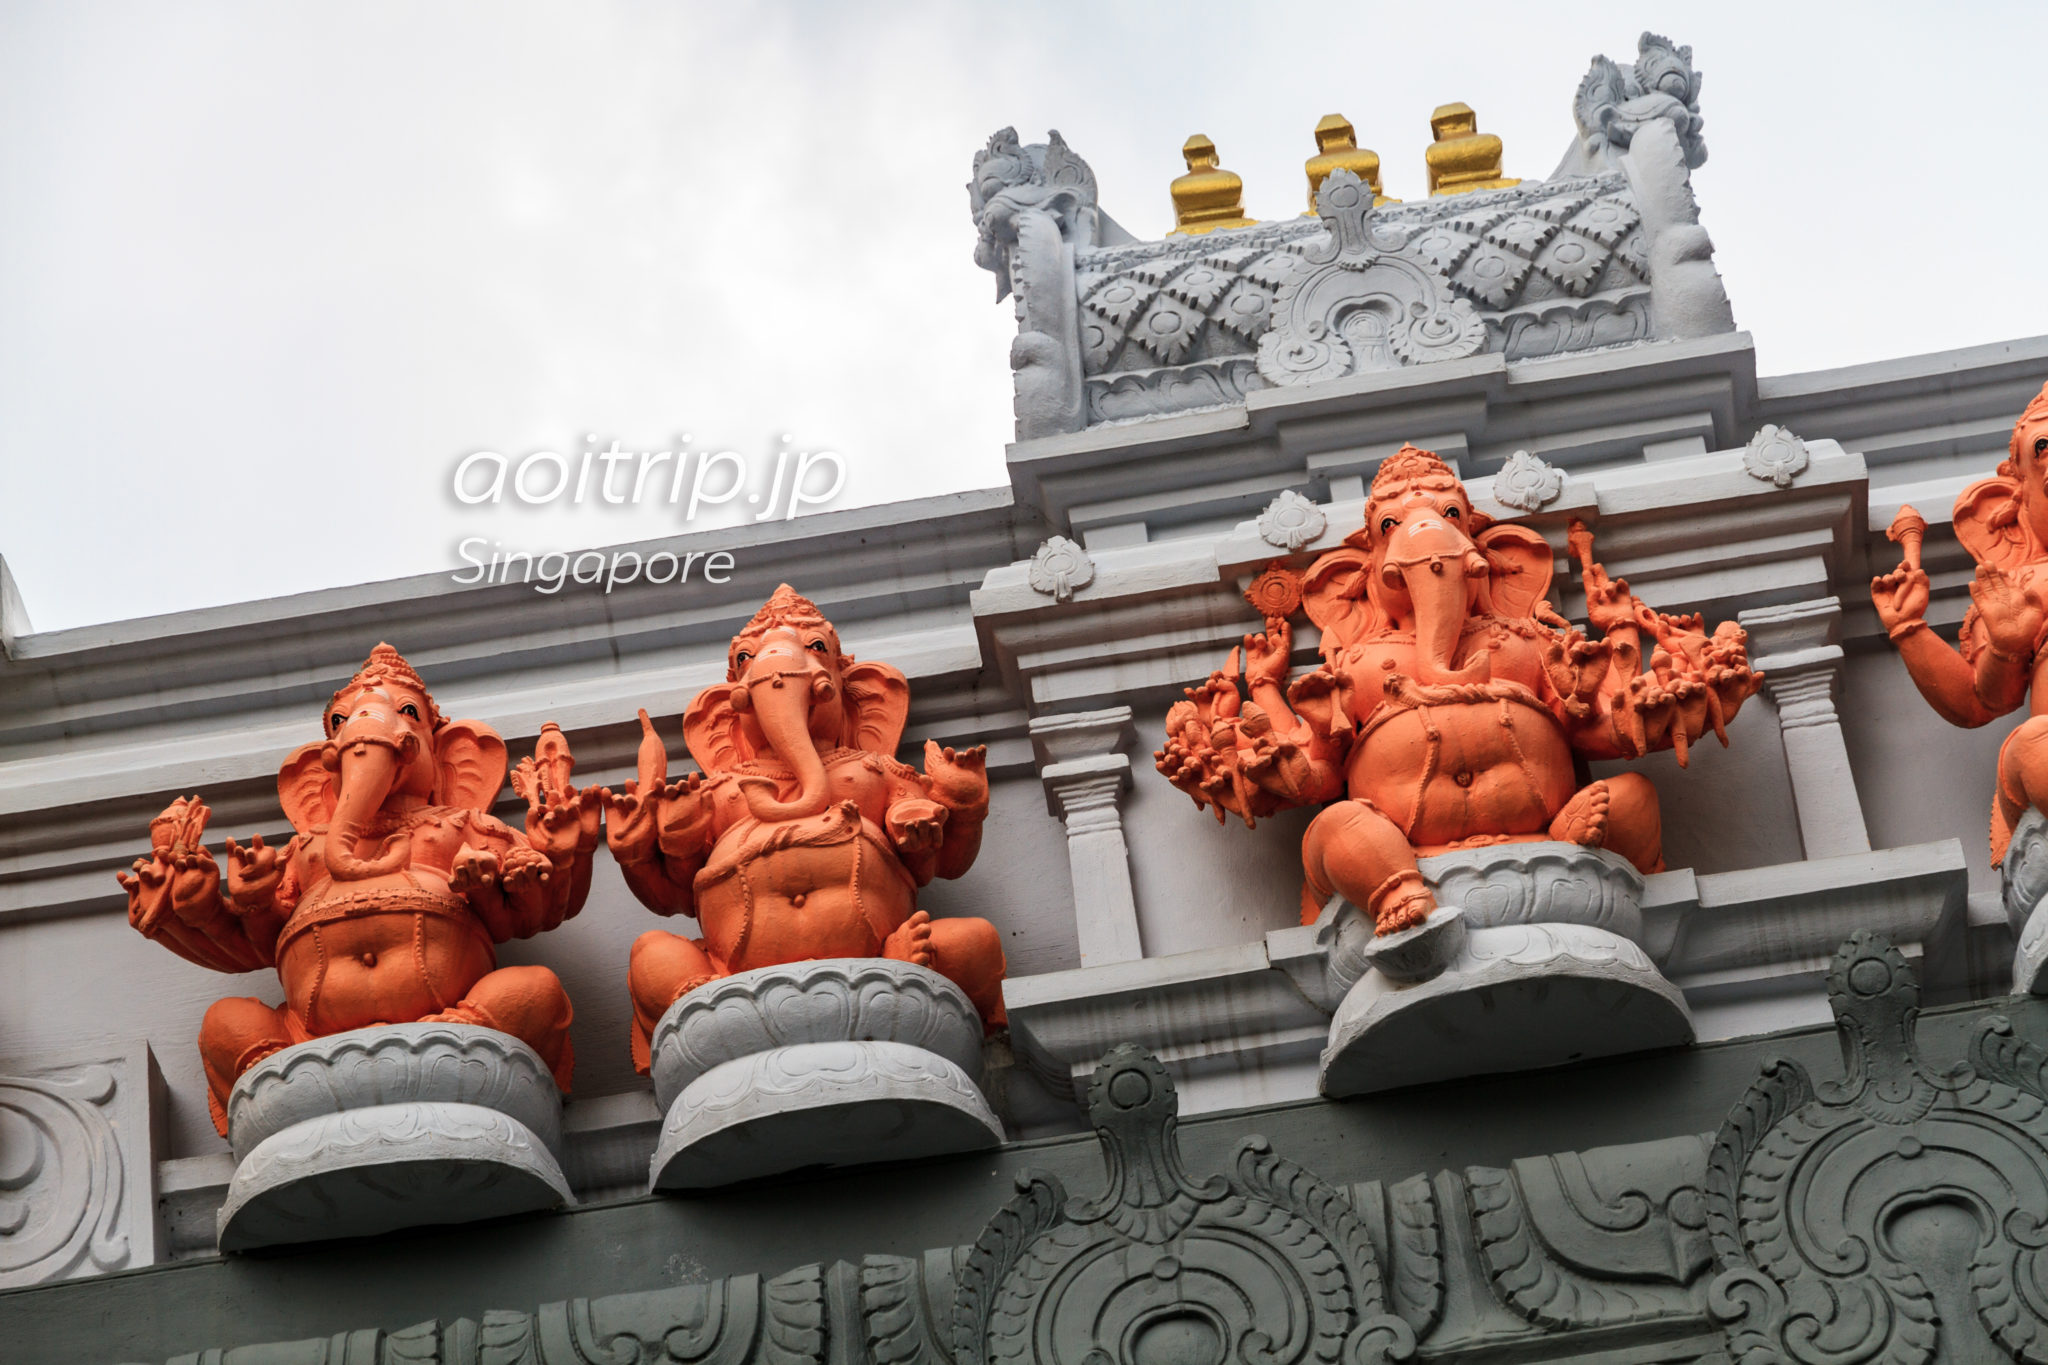 Sri Senpaga Vinayagar Temple